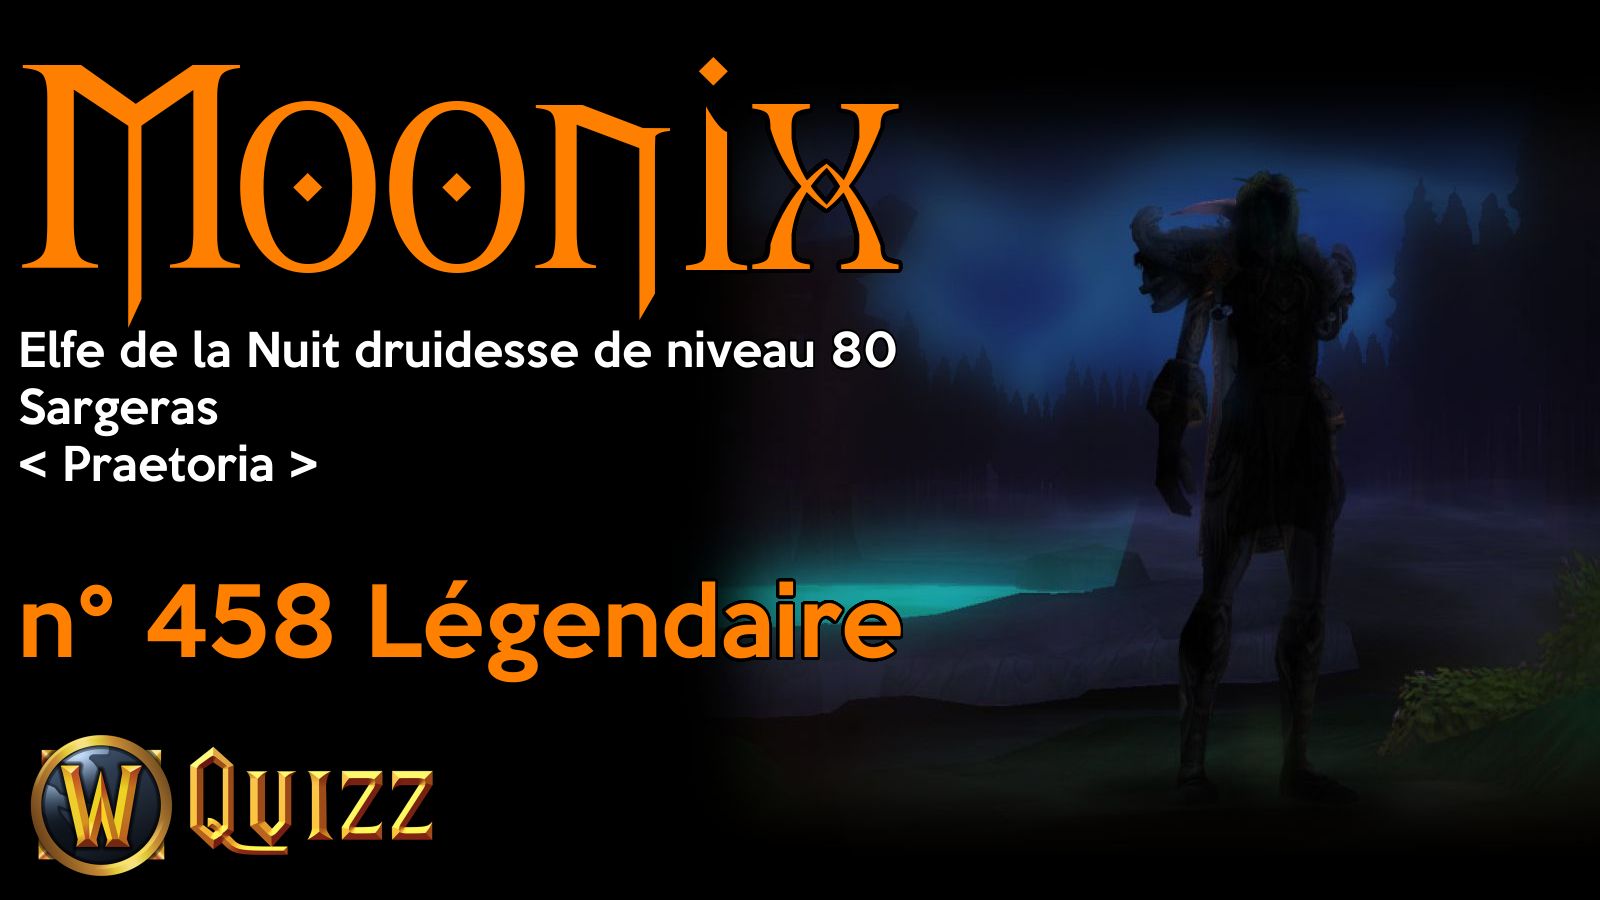 Moonix, Elfe de la Nuit druidesse de niveau 80, Sargeras